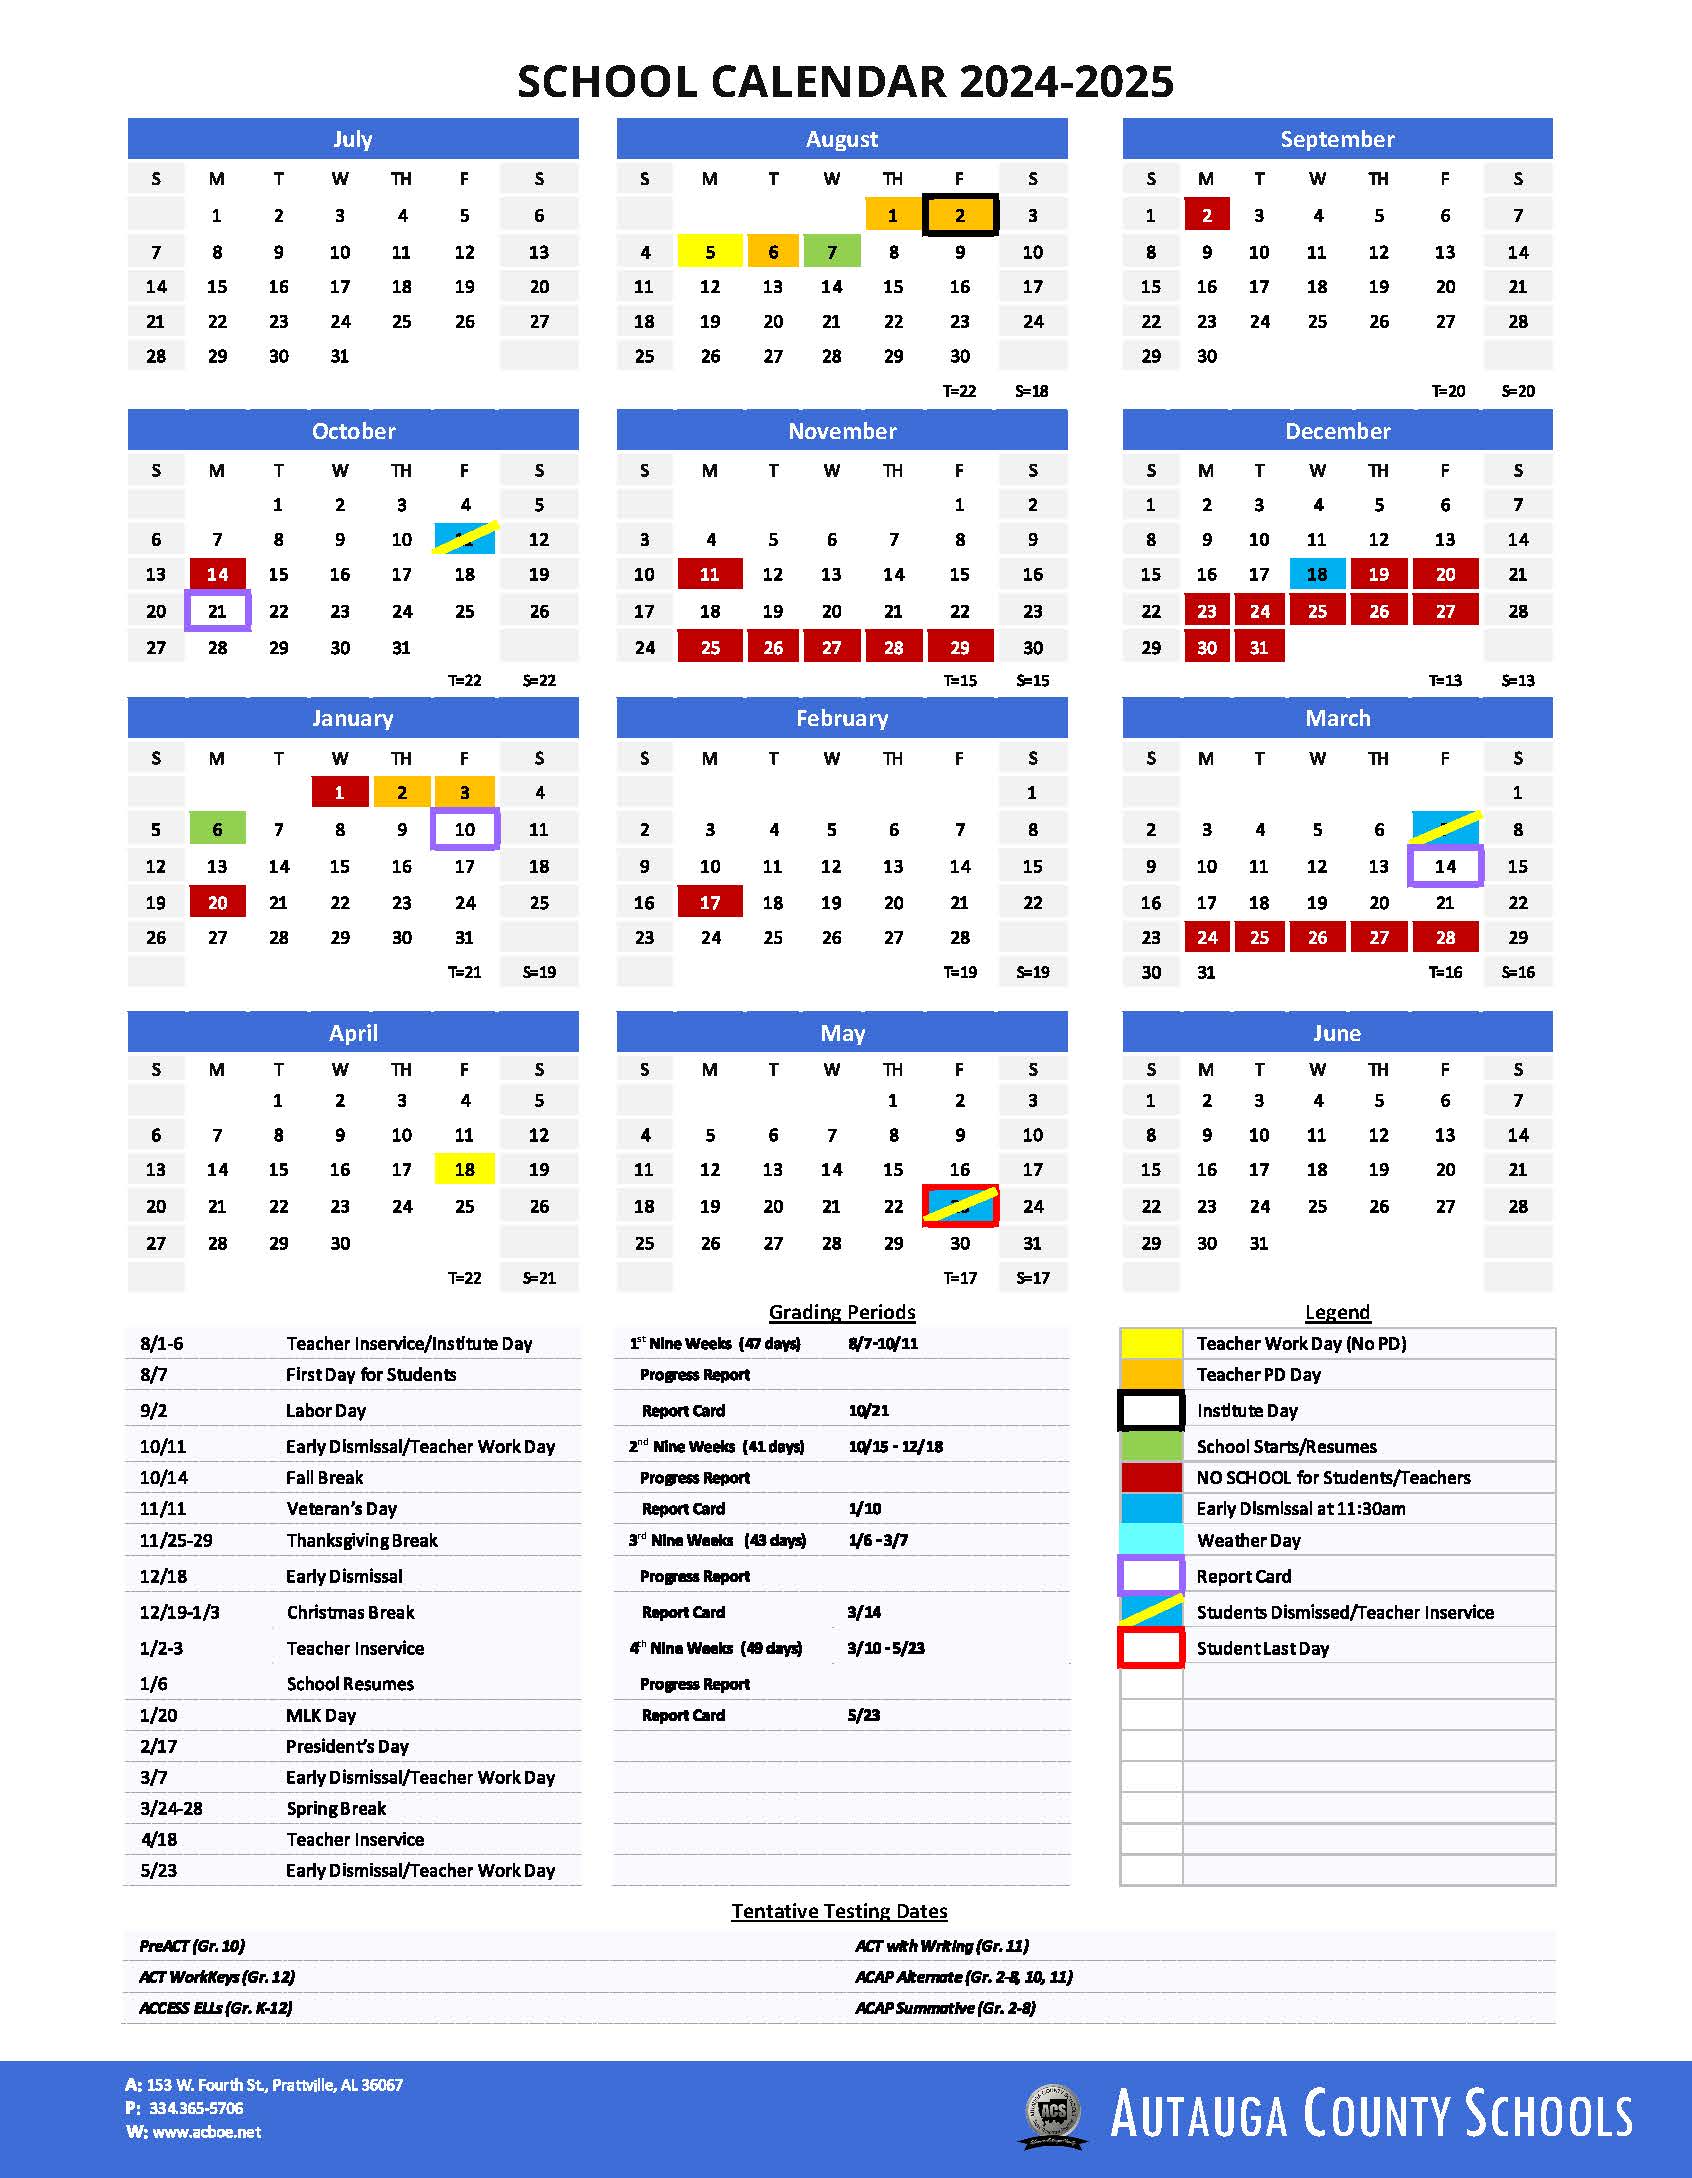 2024-2025 School Calendar as of 1/8/24